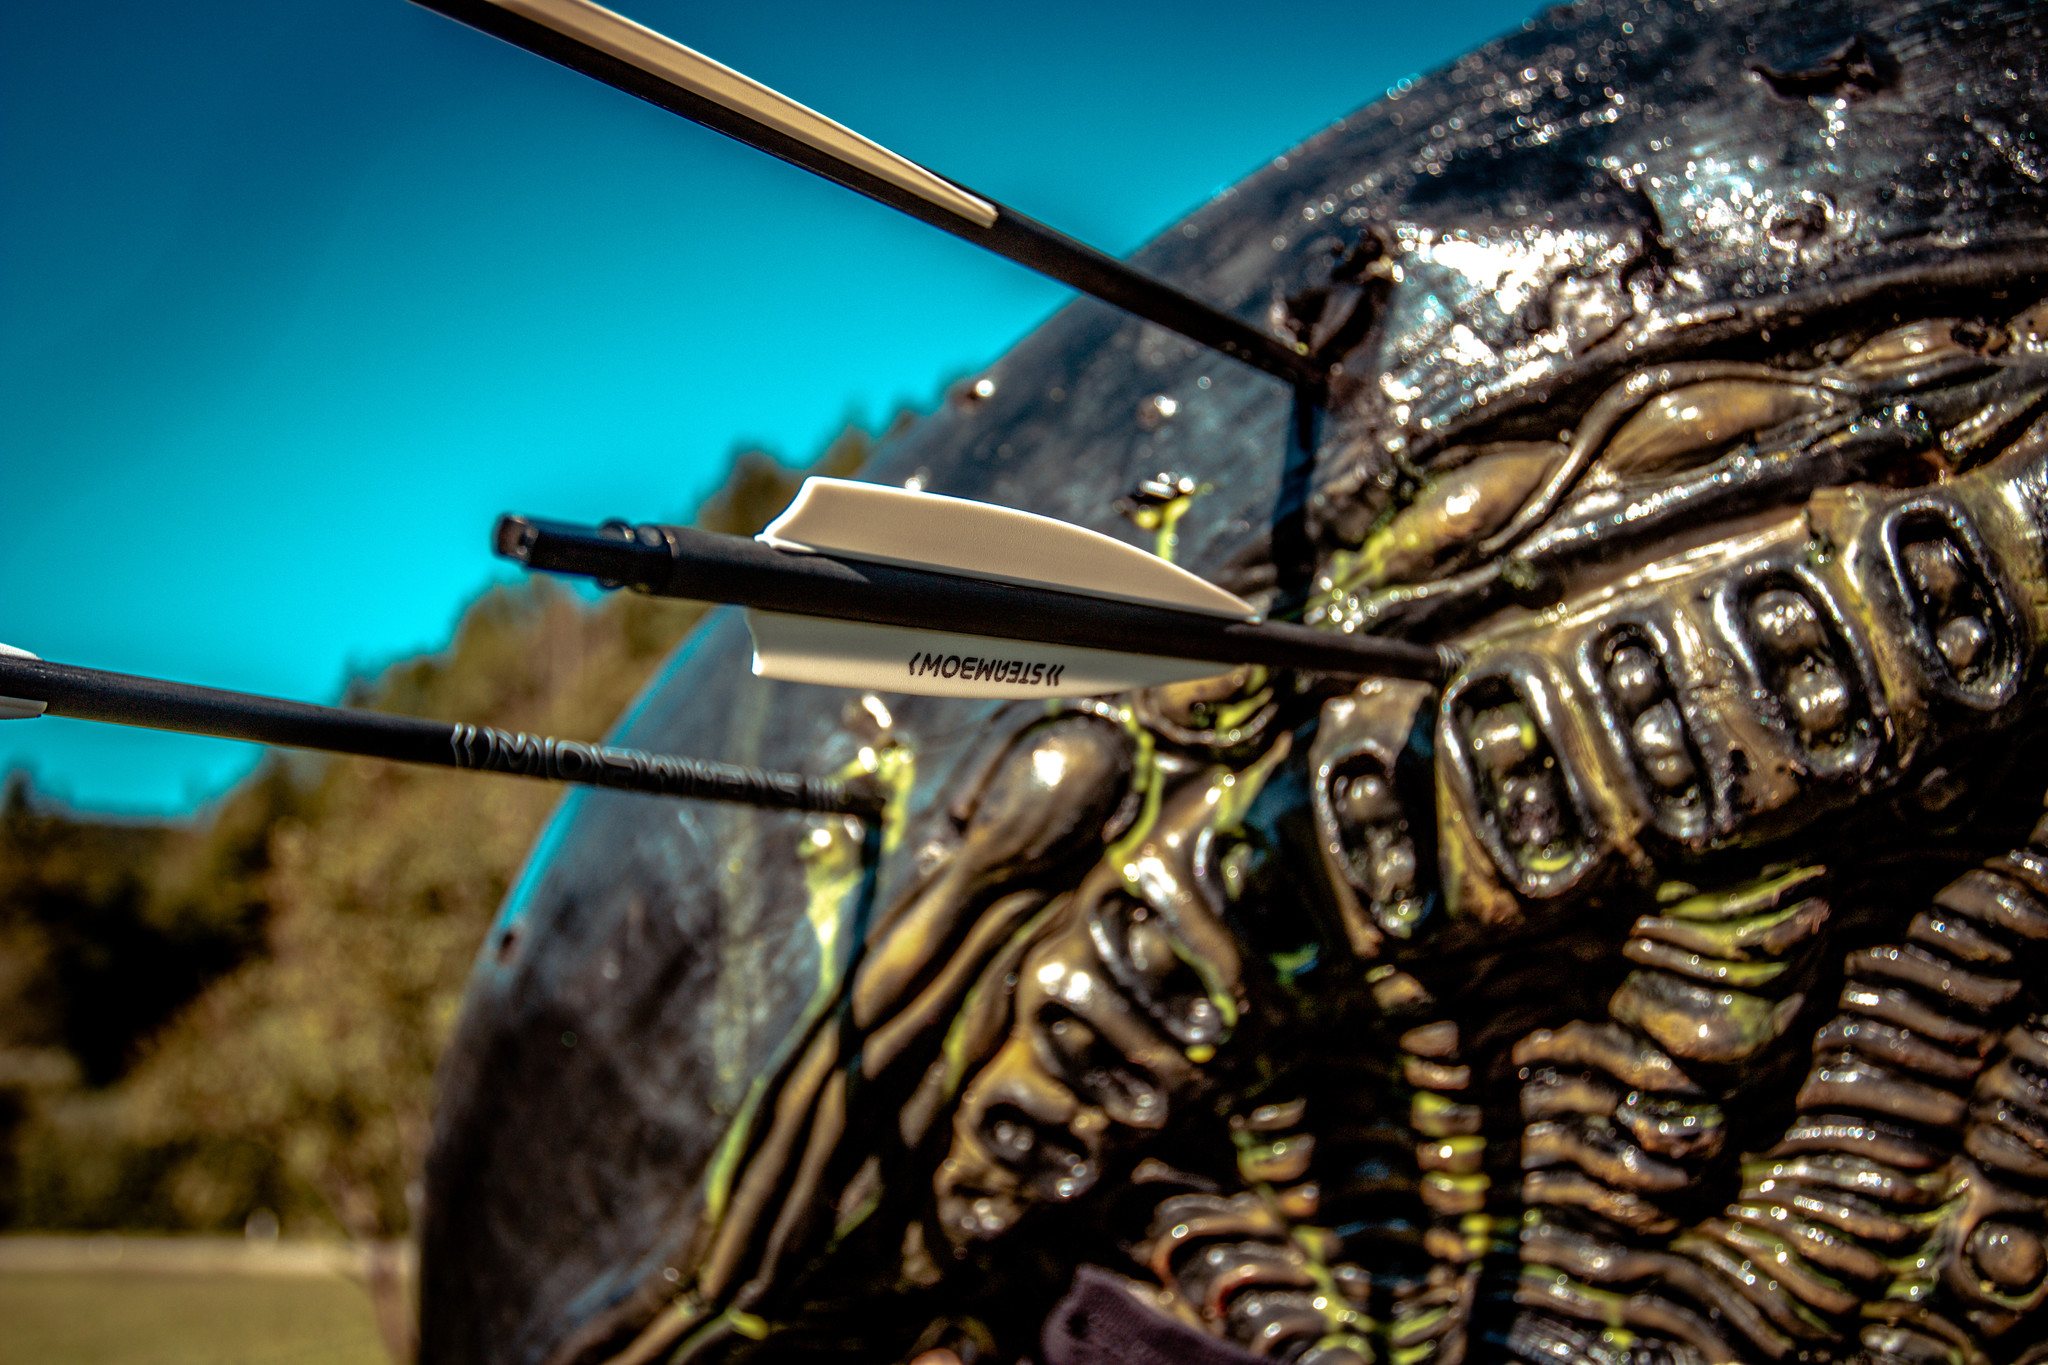 MonsterTargets Bulletproof Xenomorph Alien 3D Bleeding Target